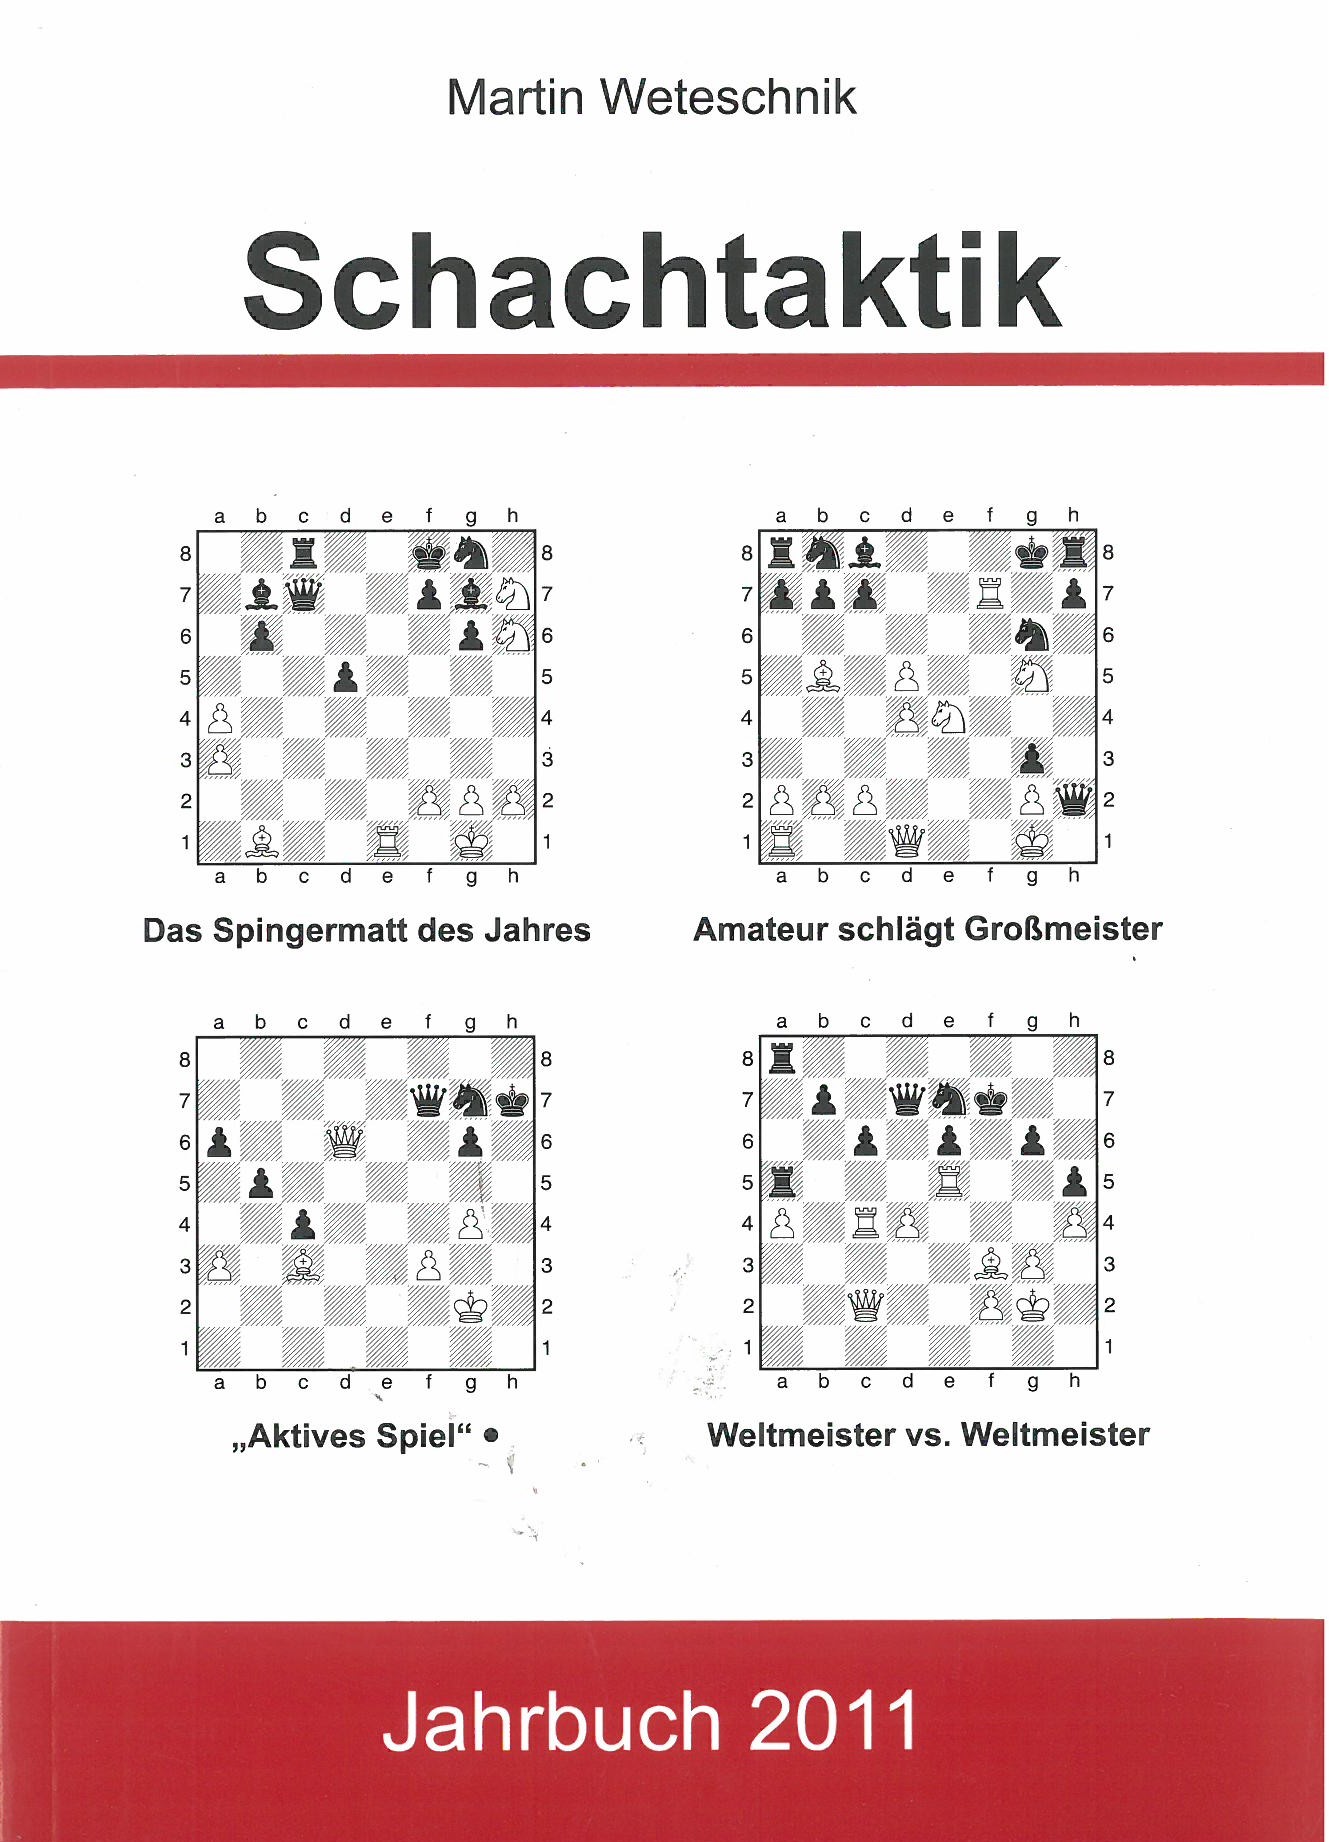 Weteschnik: Schachtaktik Jahrbuch 2011